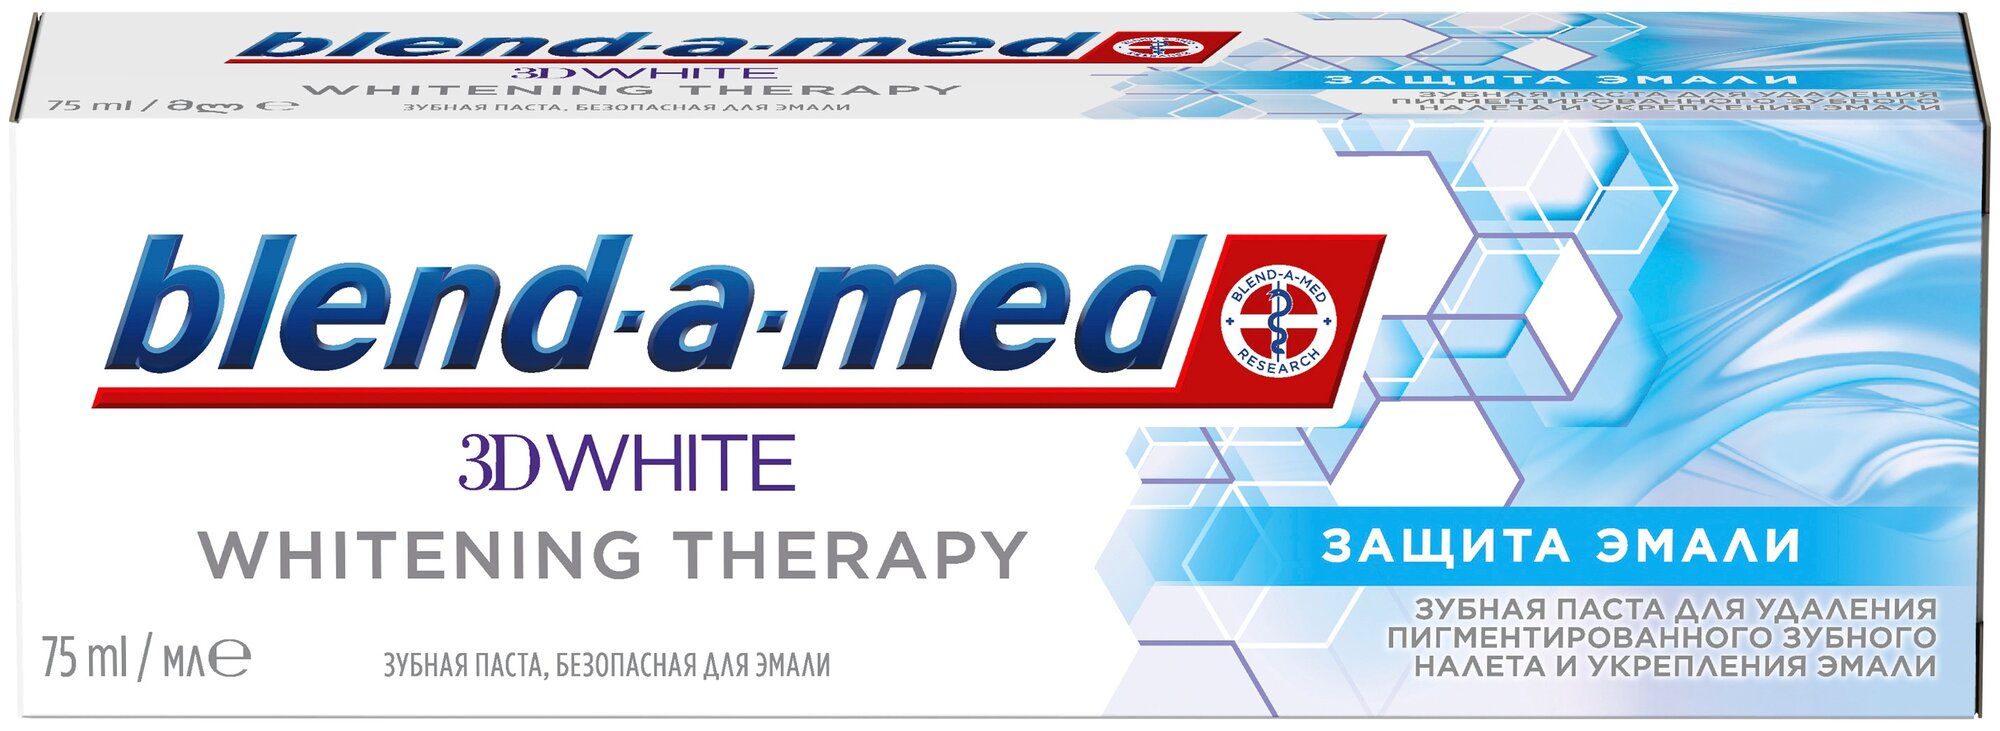 Зубная паста Blend-a-med 3D White Therapy Защита эмали, 75 мл.